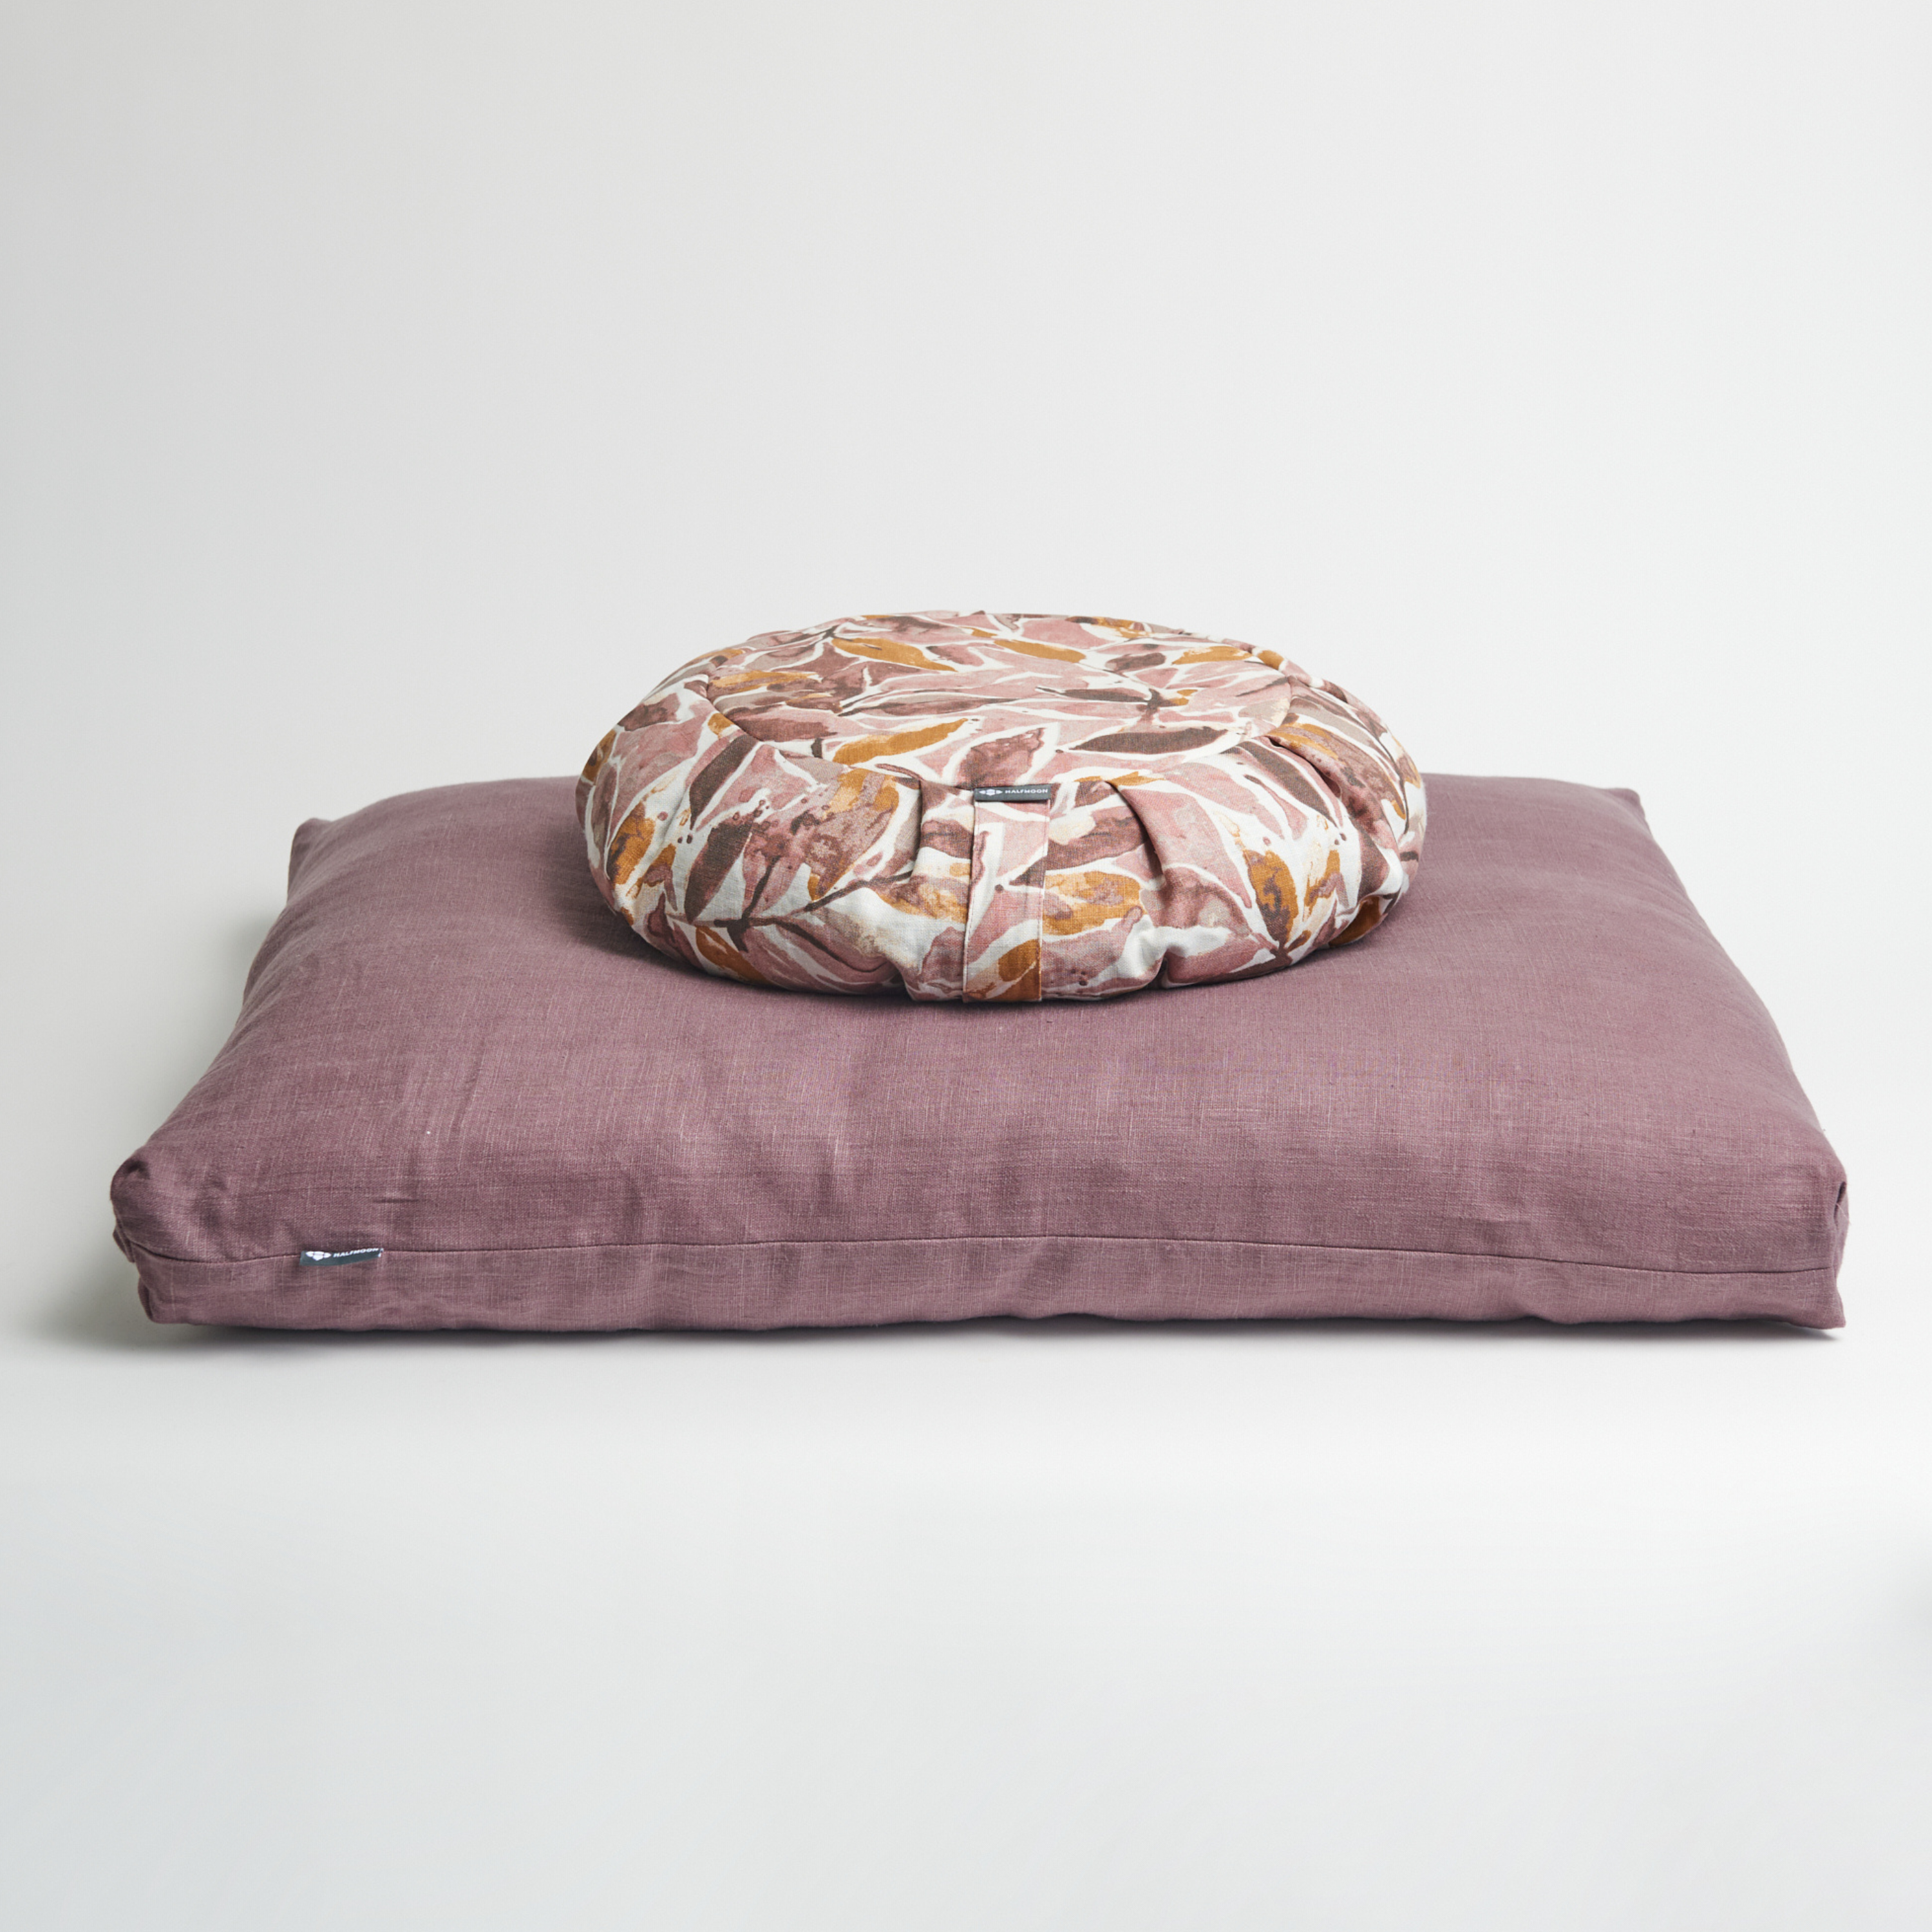 Zabuton Floor Cushion - Meditation Pillow - Gaiam